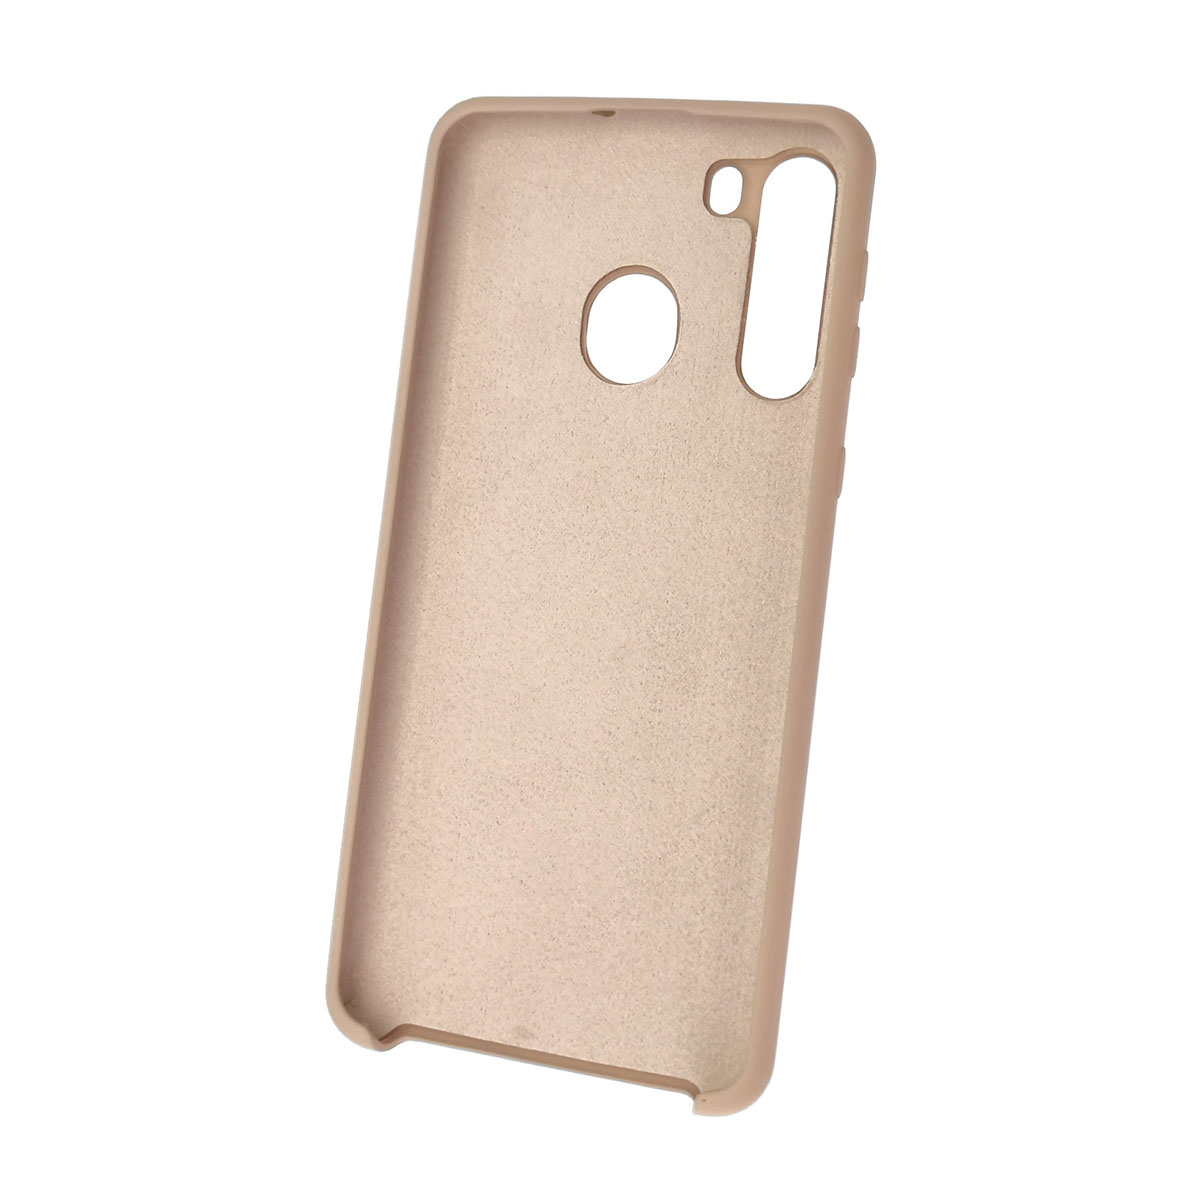 Чехол накладка Silicon Cover для SAMSUNG Galaxy A21 (SM-A215), силикон, бархат, цвет розовый песок.